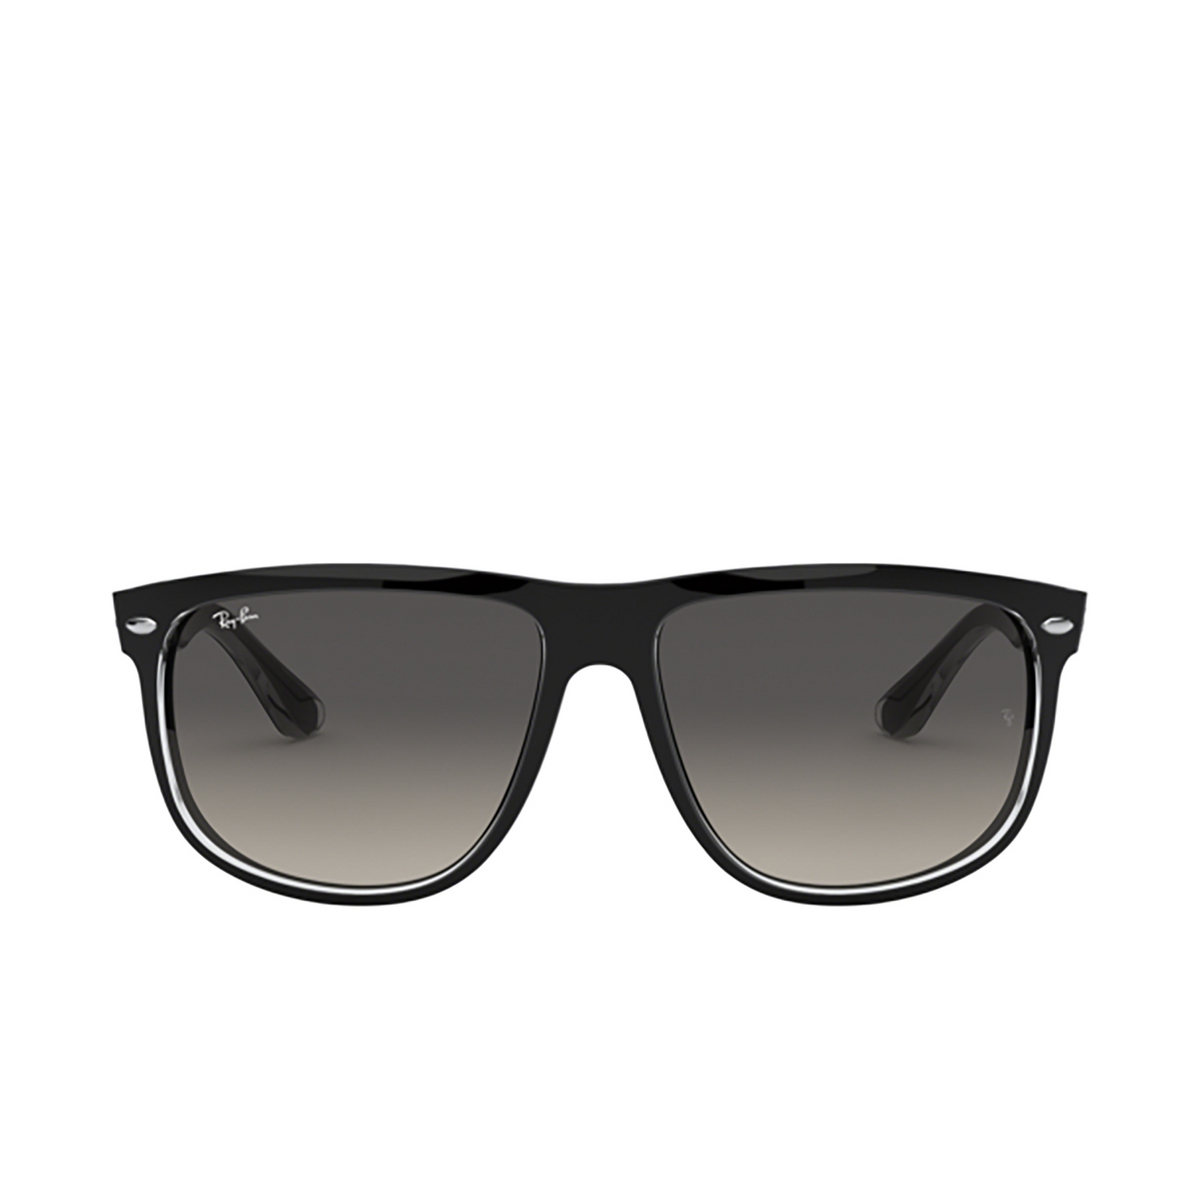 Ray-Ban BOYFRIEND Sunglasses 603971 - front view